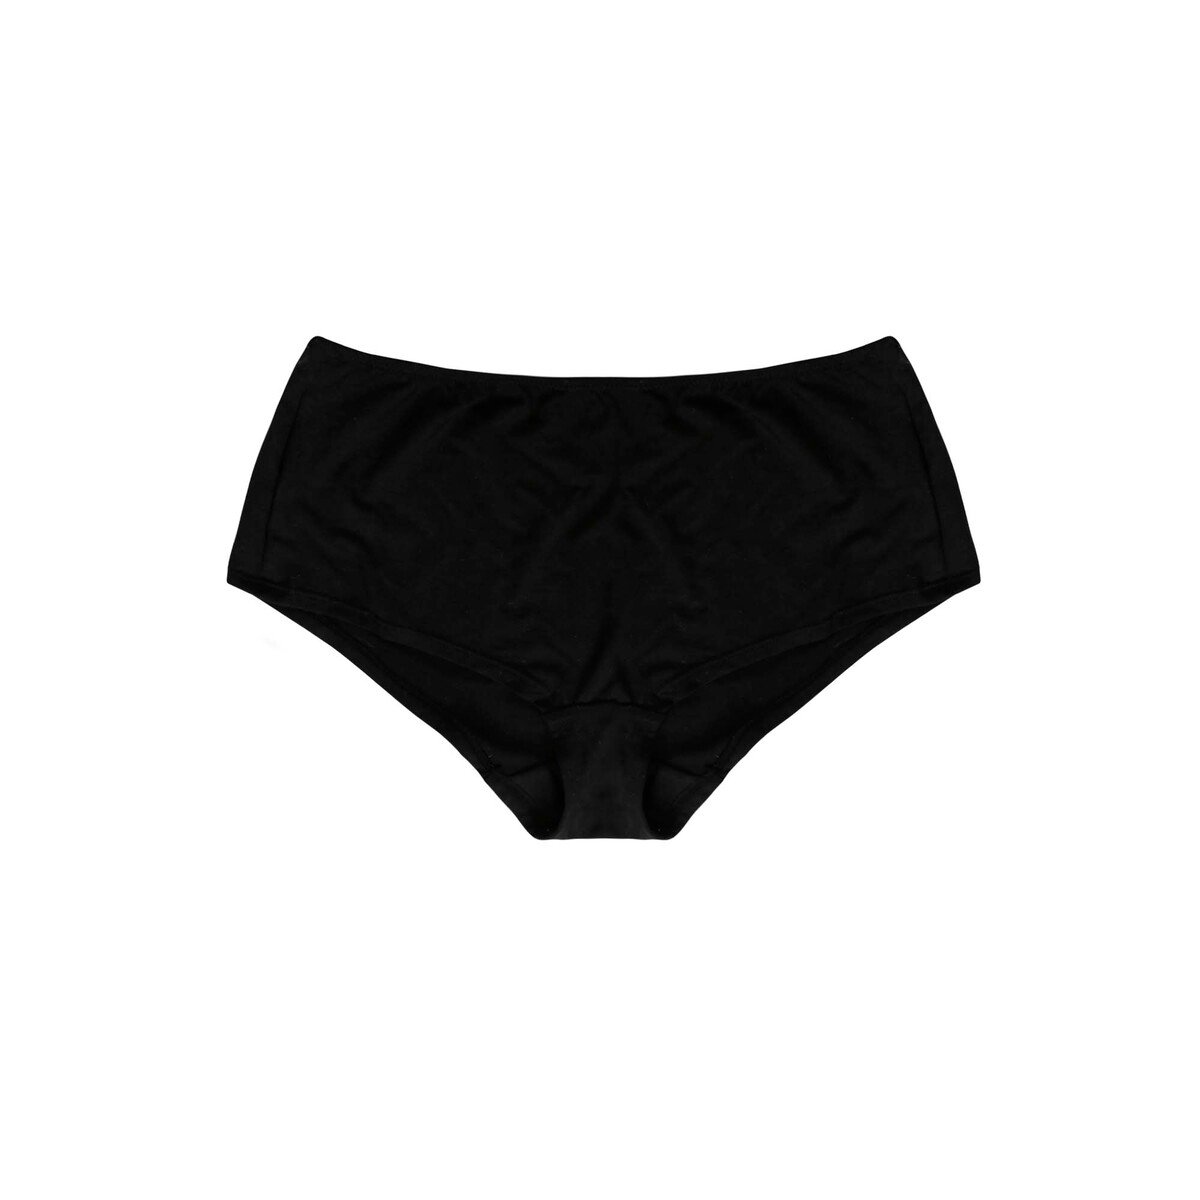 Cortigiani Women's Boyshort Panties 23-17001 Black Large